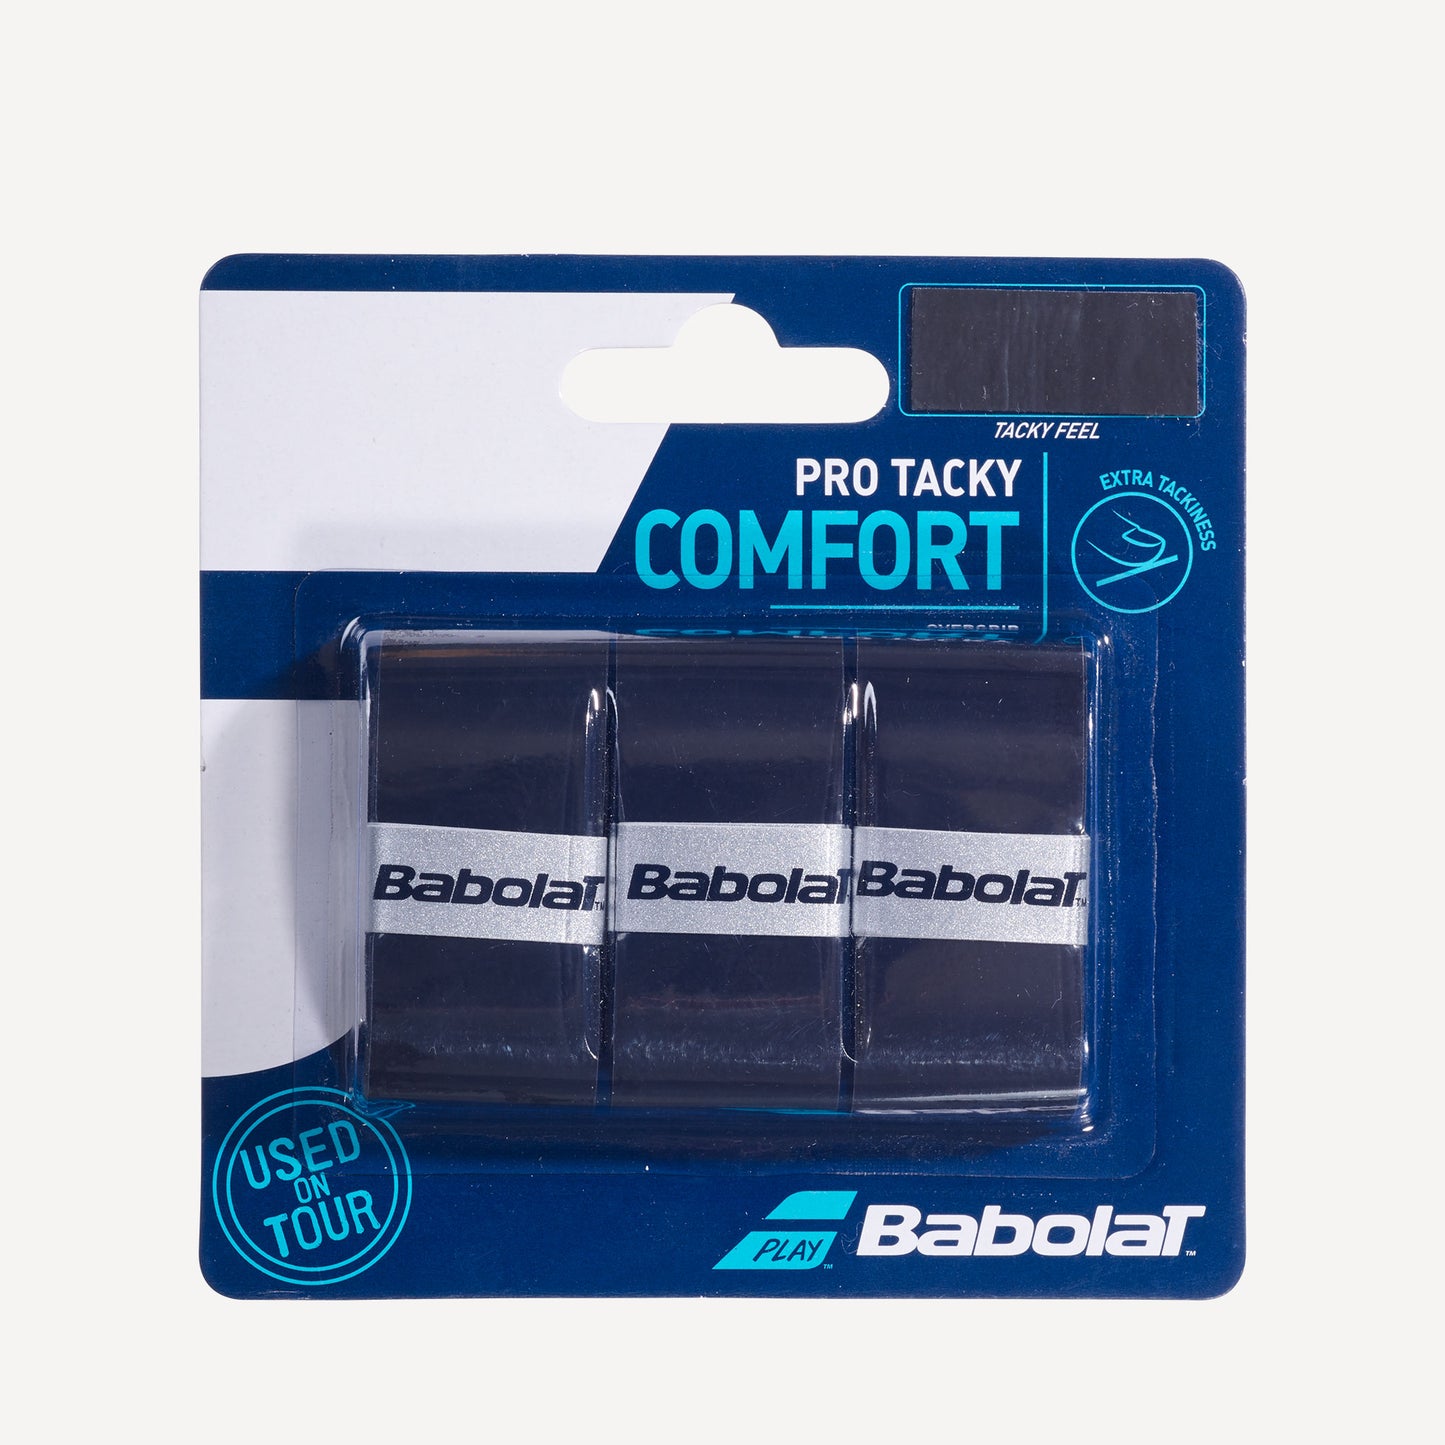 Babolat Pro Tacky Tennis Overgrip 1